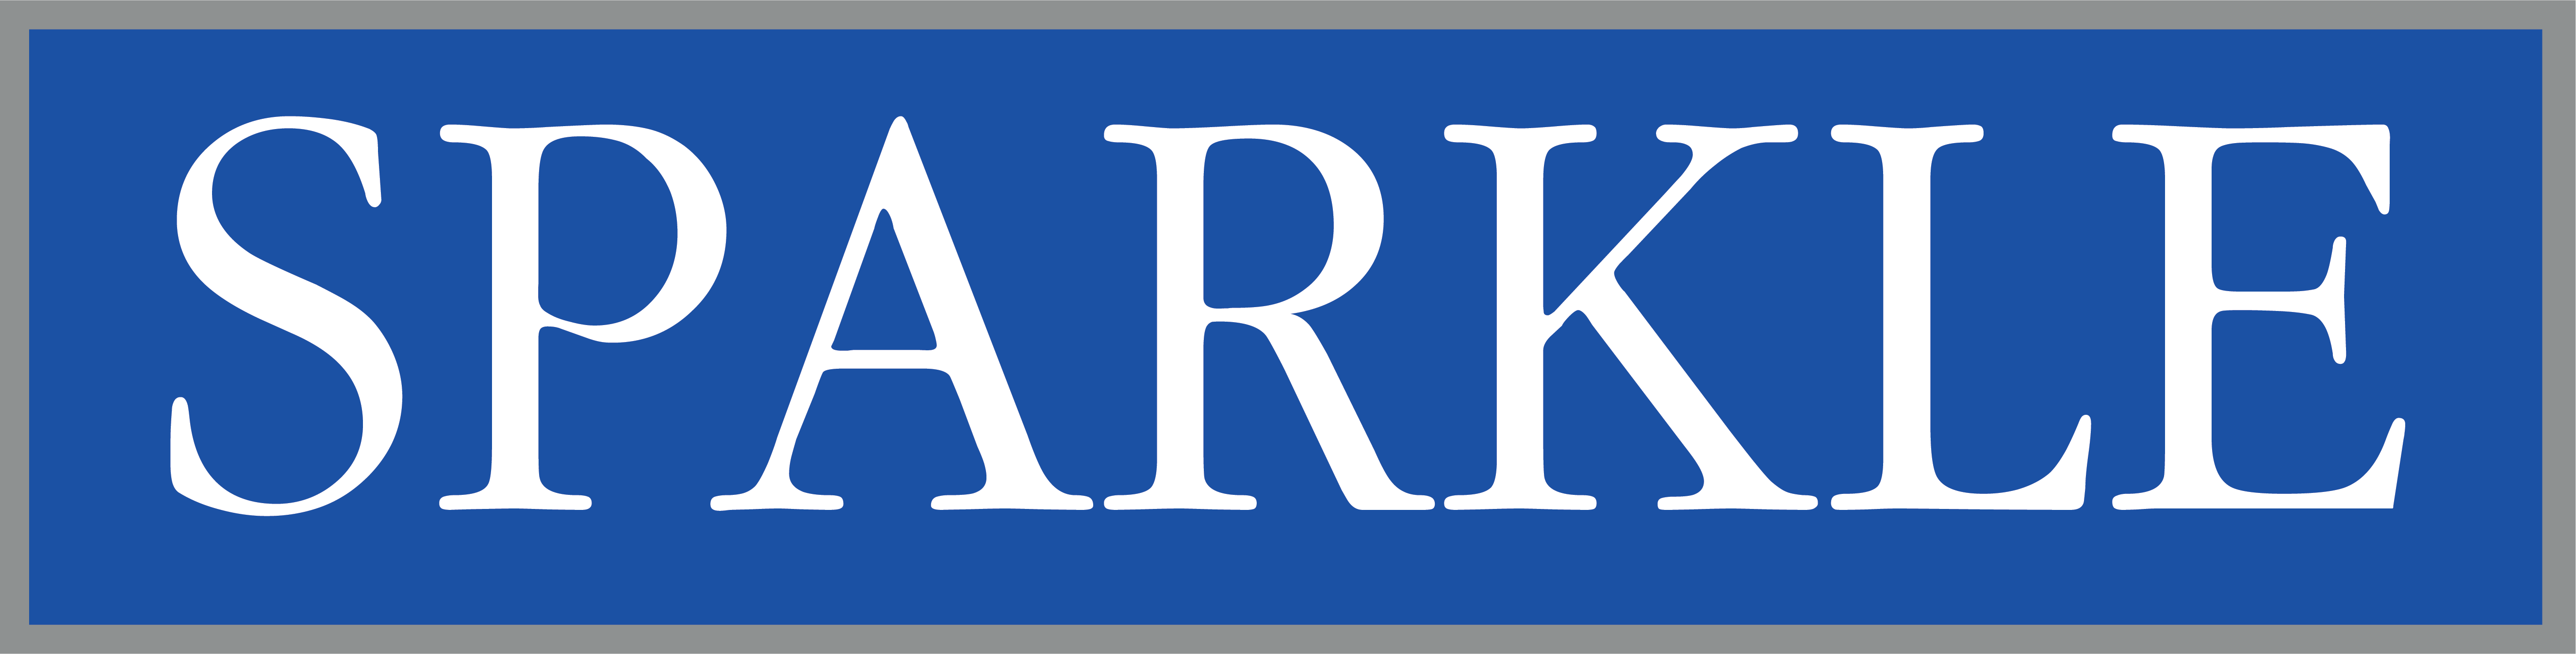 spakle logo